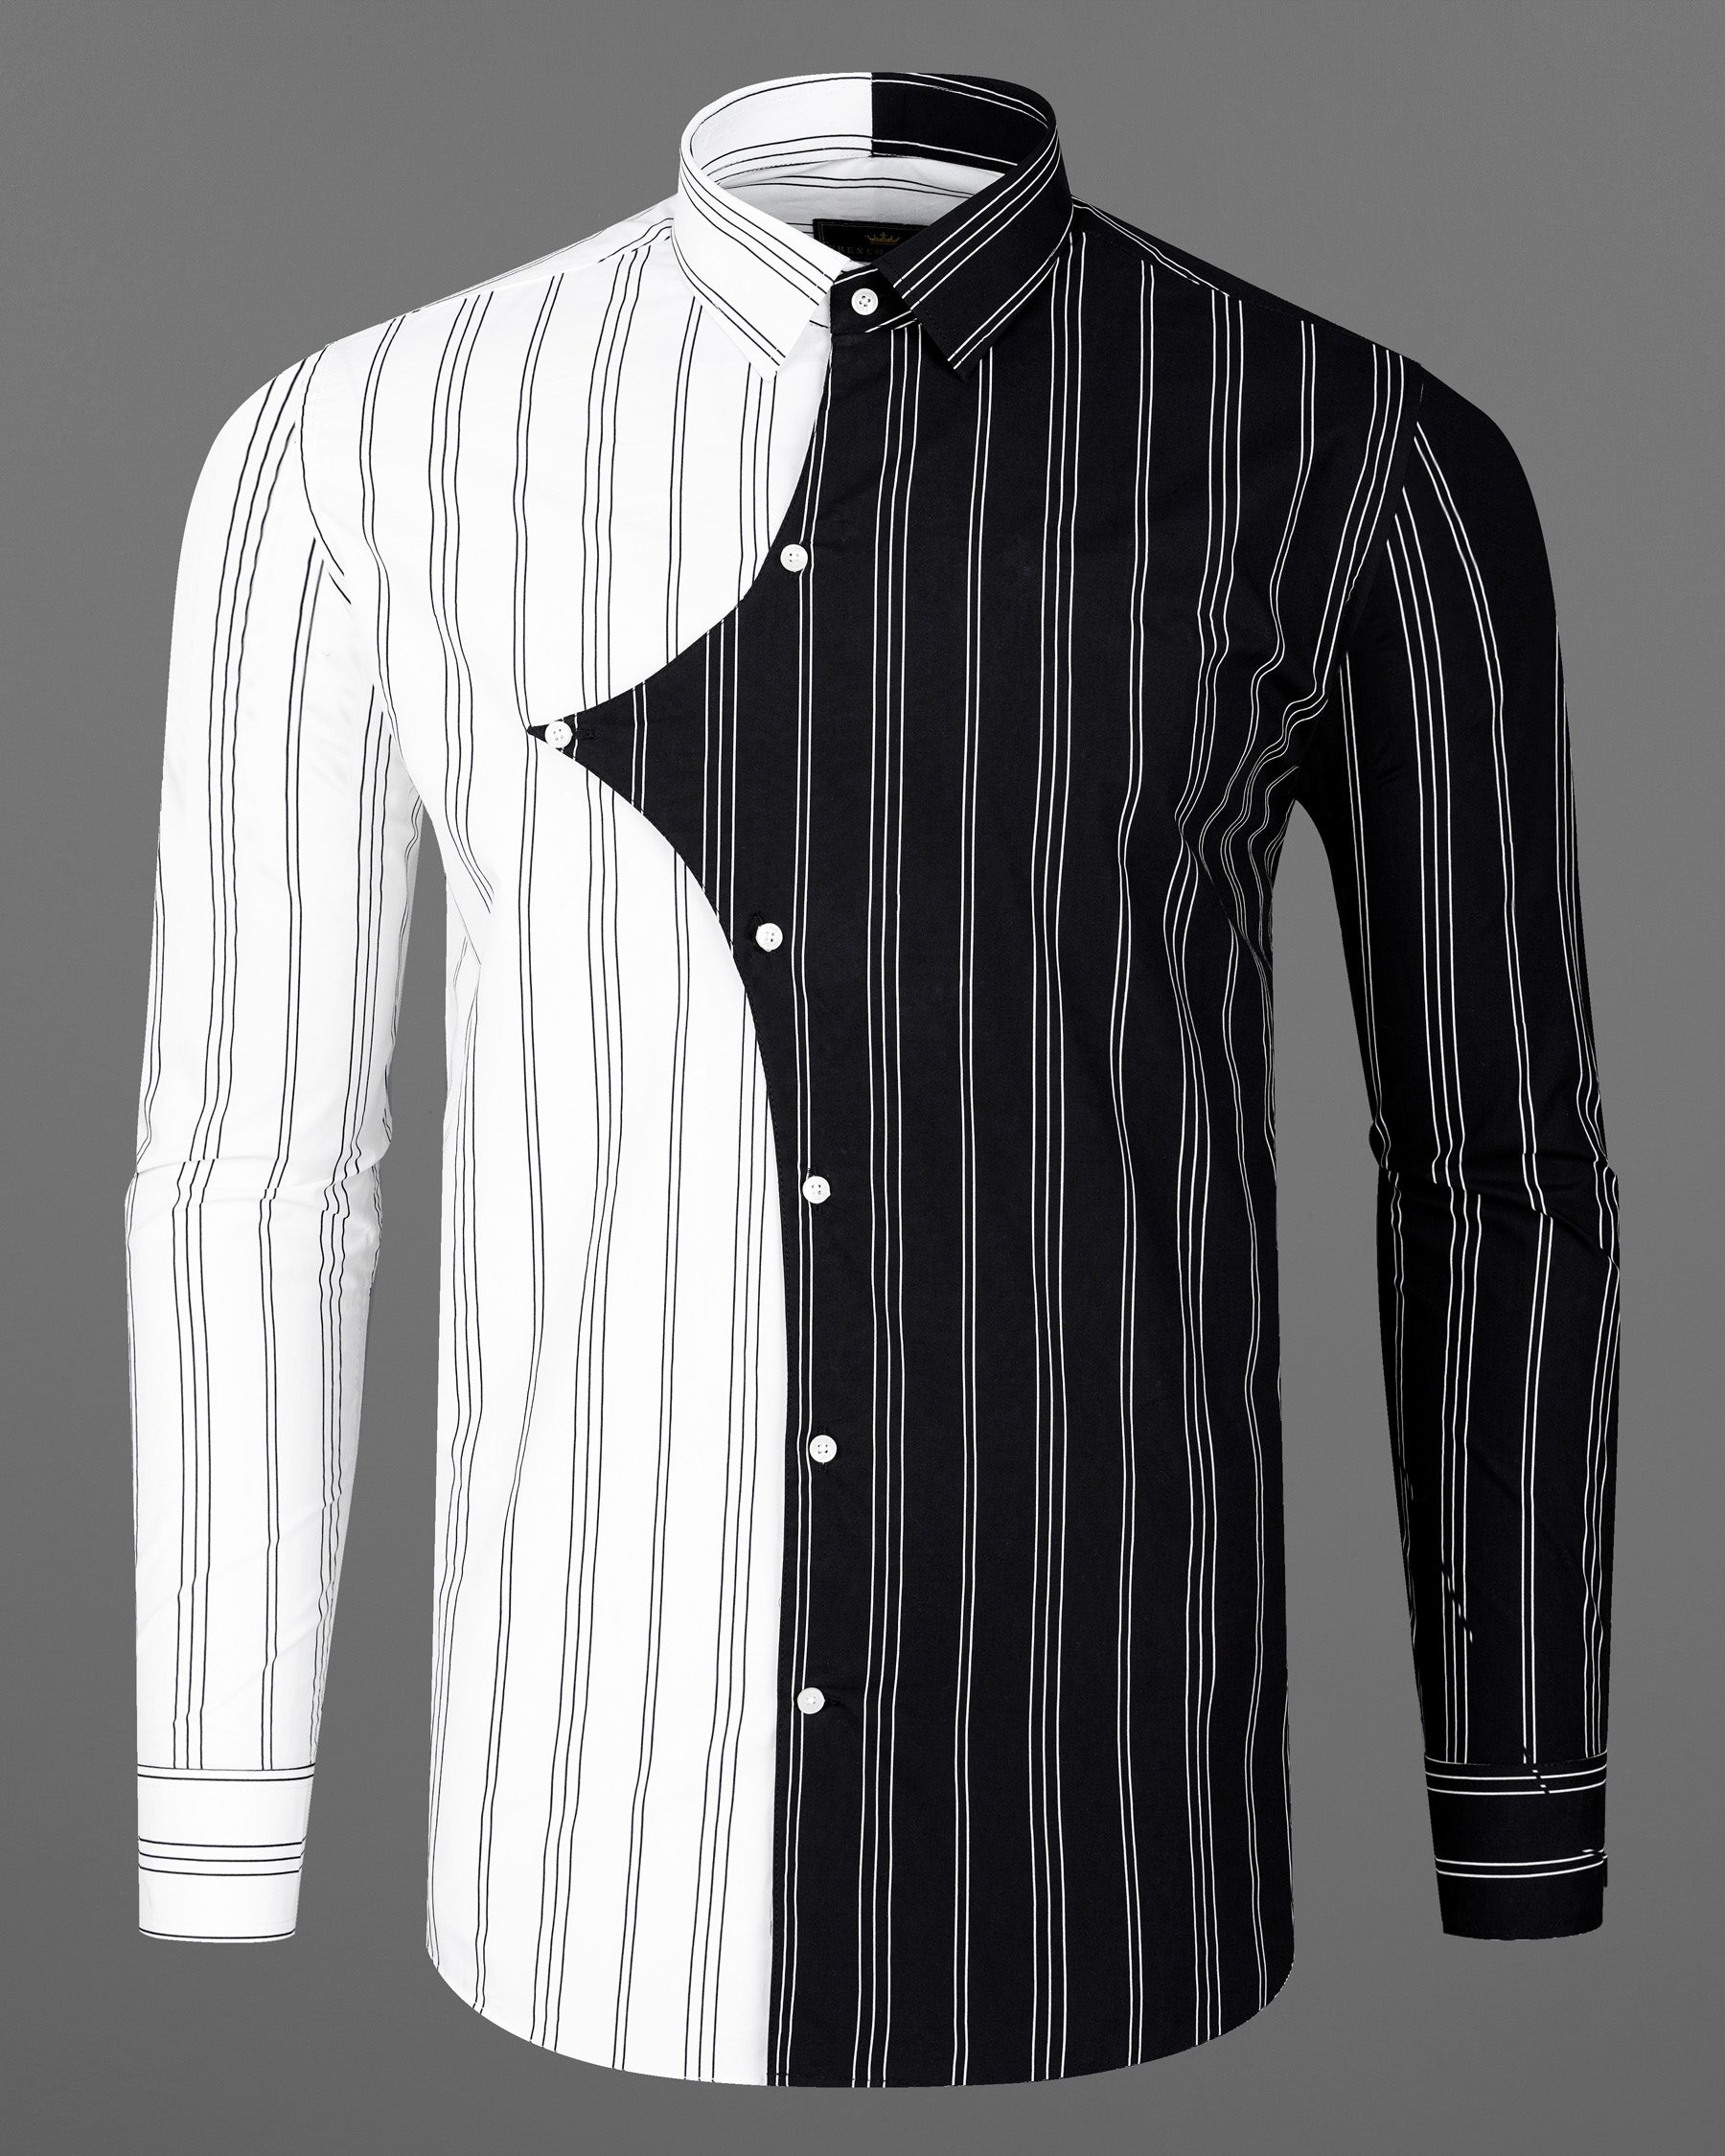 Half White With Half Black Pin Striped Twill Premium Cotton Designer Shirt7899-D22-38, 7899-D22-H-38, 7899-D22-39, 7899-D22-H-39, 7899-D22-40, 7899-D22-H-40, 7899-D22-42, 7899-D22-H-42, 7899-D22-44, 7899-D22-H-44, 7899-D22-46, 7899-D22-H-46, 7899-D22-48, 7899-D22-H-48, 7899-D22-50, 7899-D22-H-50, 7899-D22-52, 7899-D22-H-52